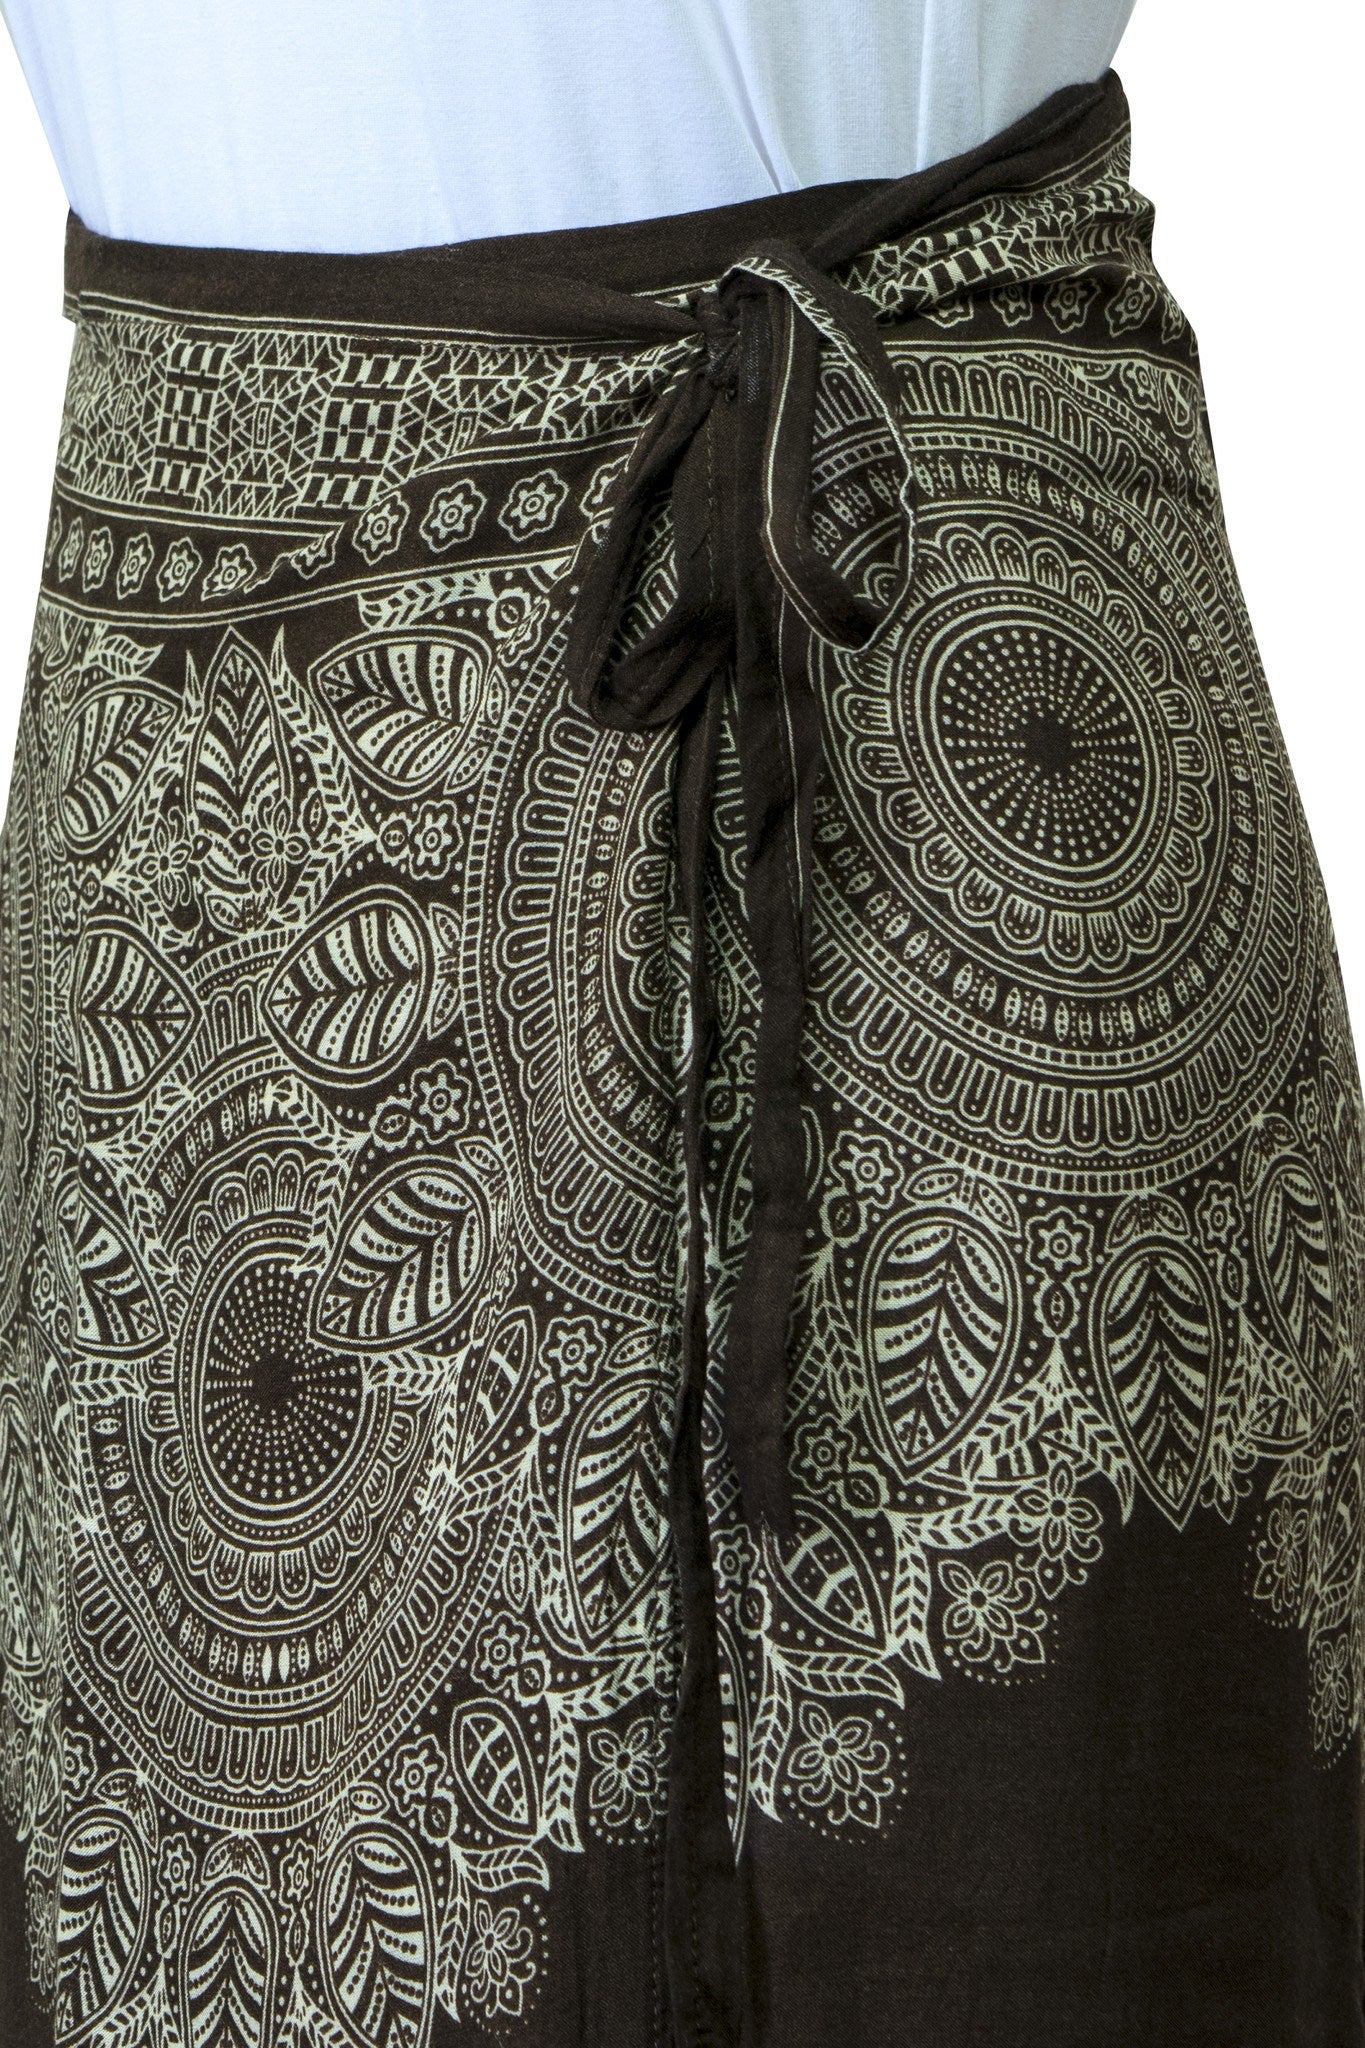 Wrap Sarong Skirt Mandala Flower print - CCCollections